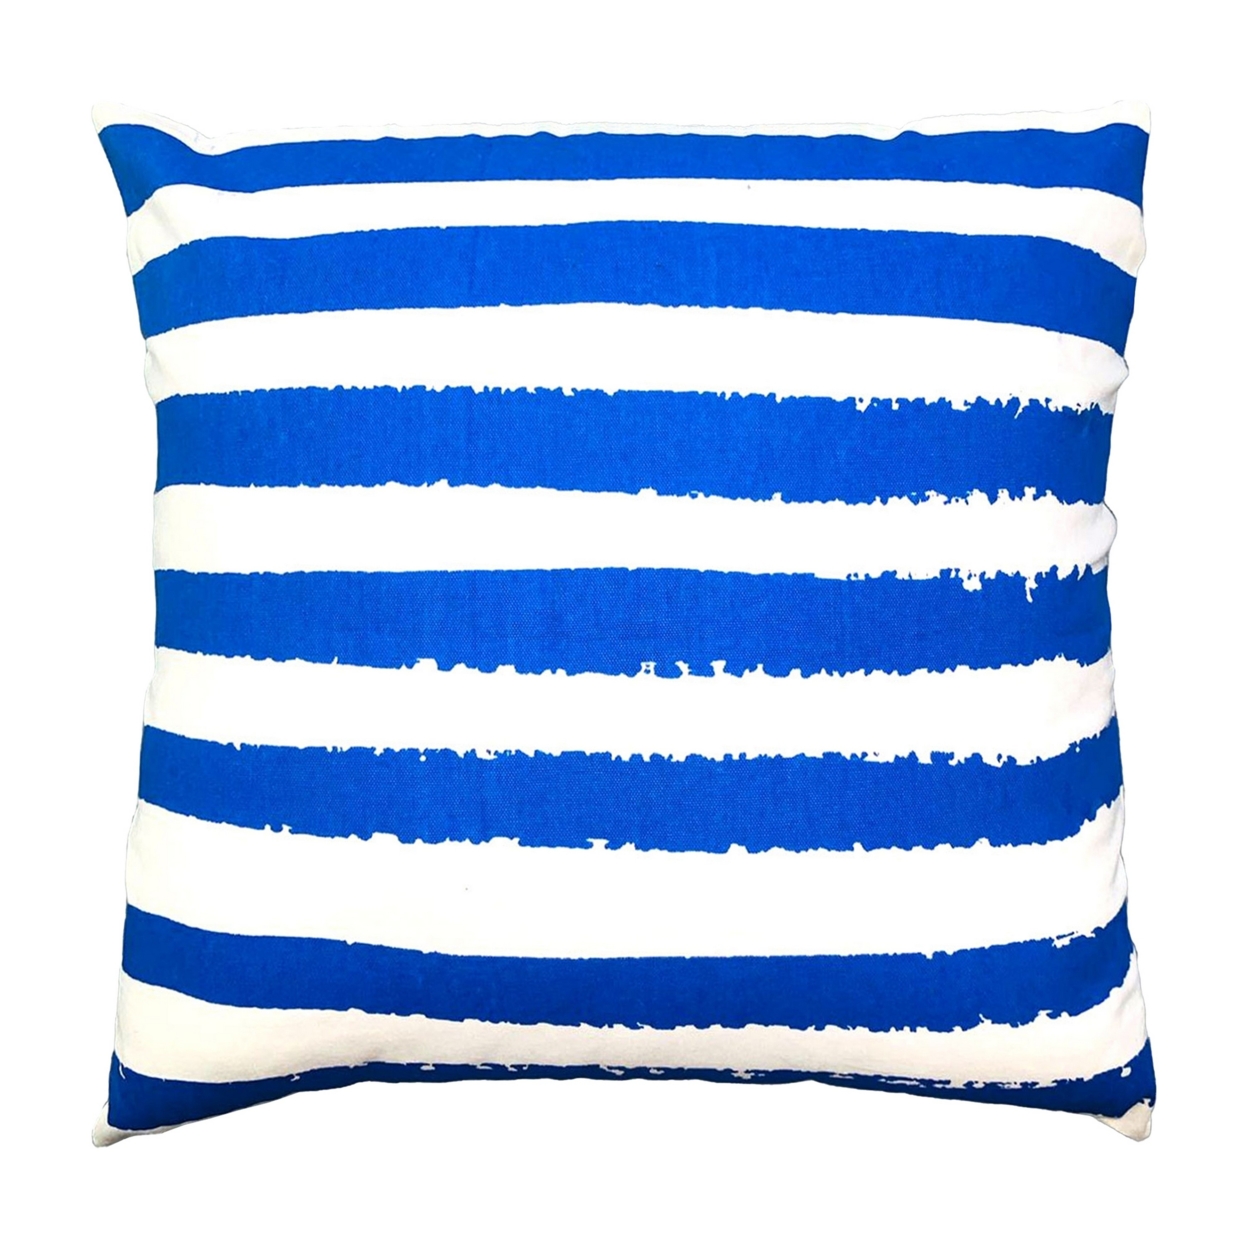 20 X 20 Modern Square Cotton Accent Throw Pillow, Screen Printed Stripes Pattern, Blue, White- Saltoro Sherpi